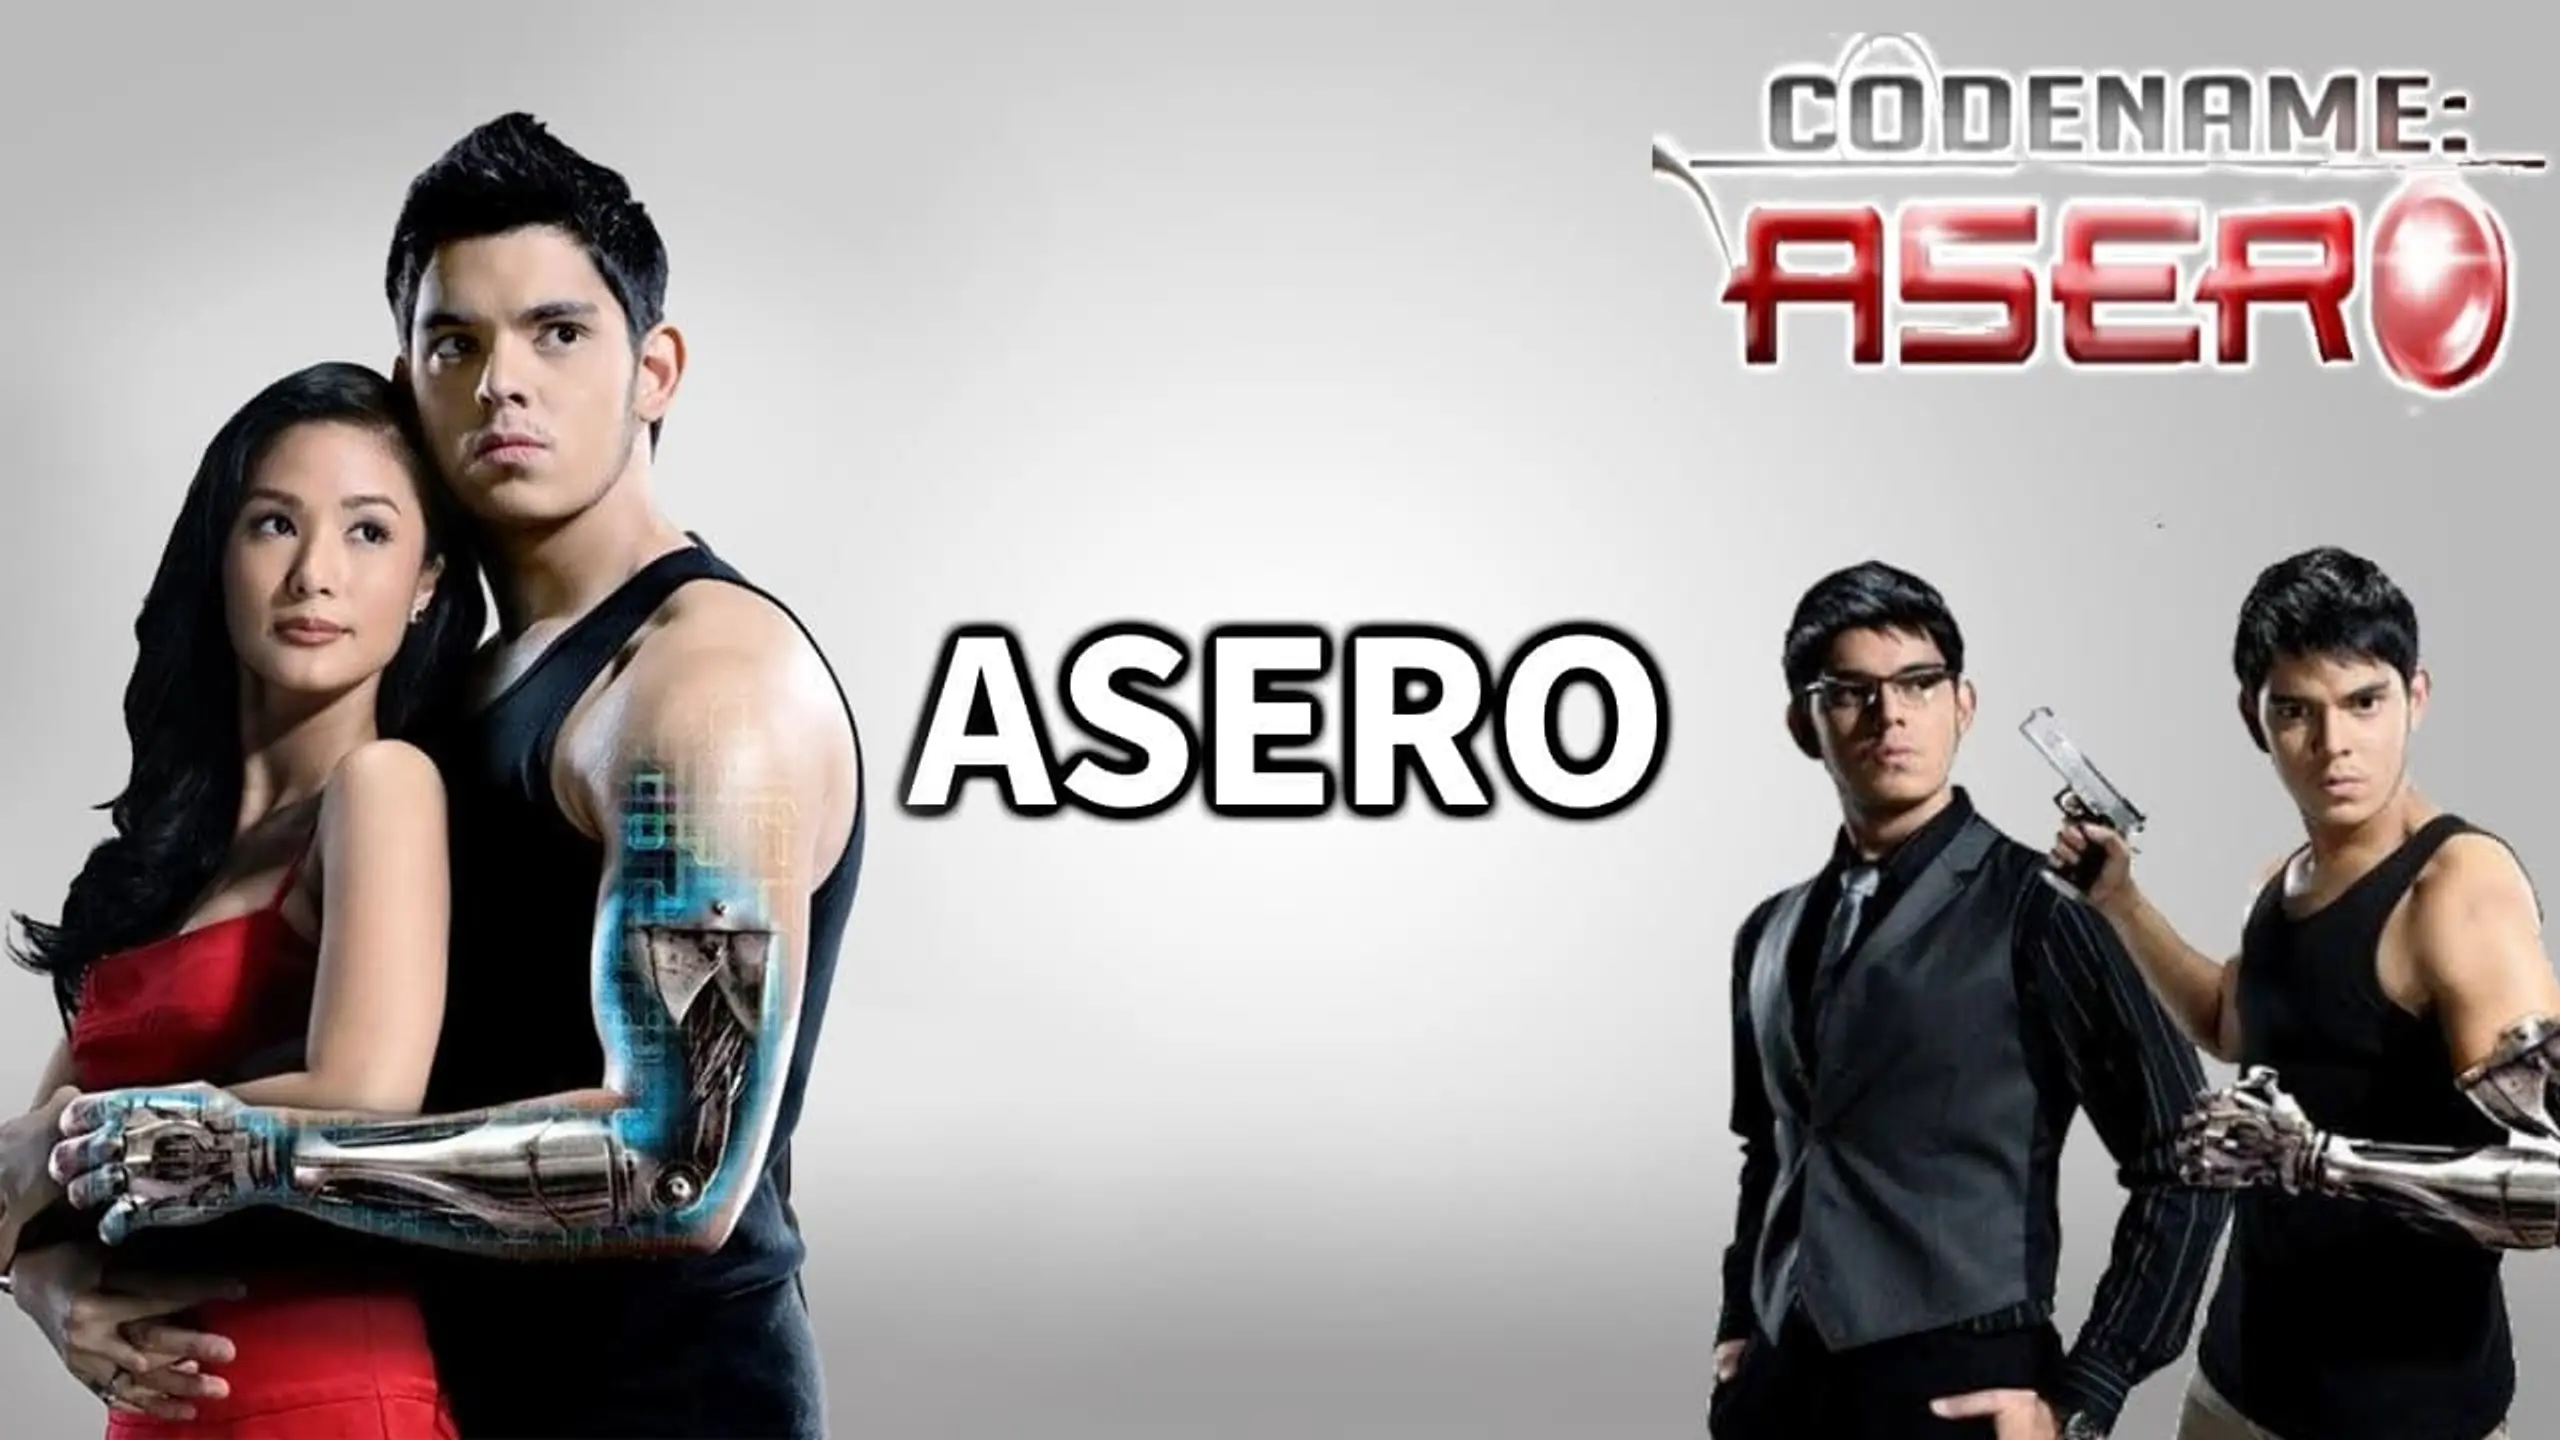 Codename: Asero